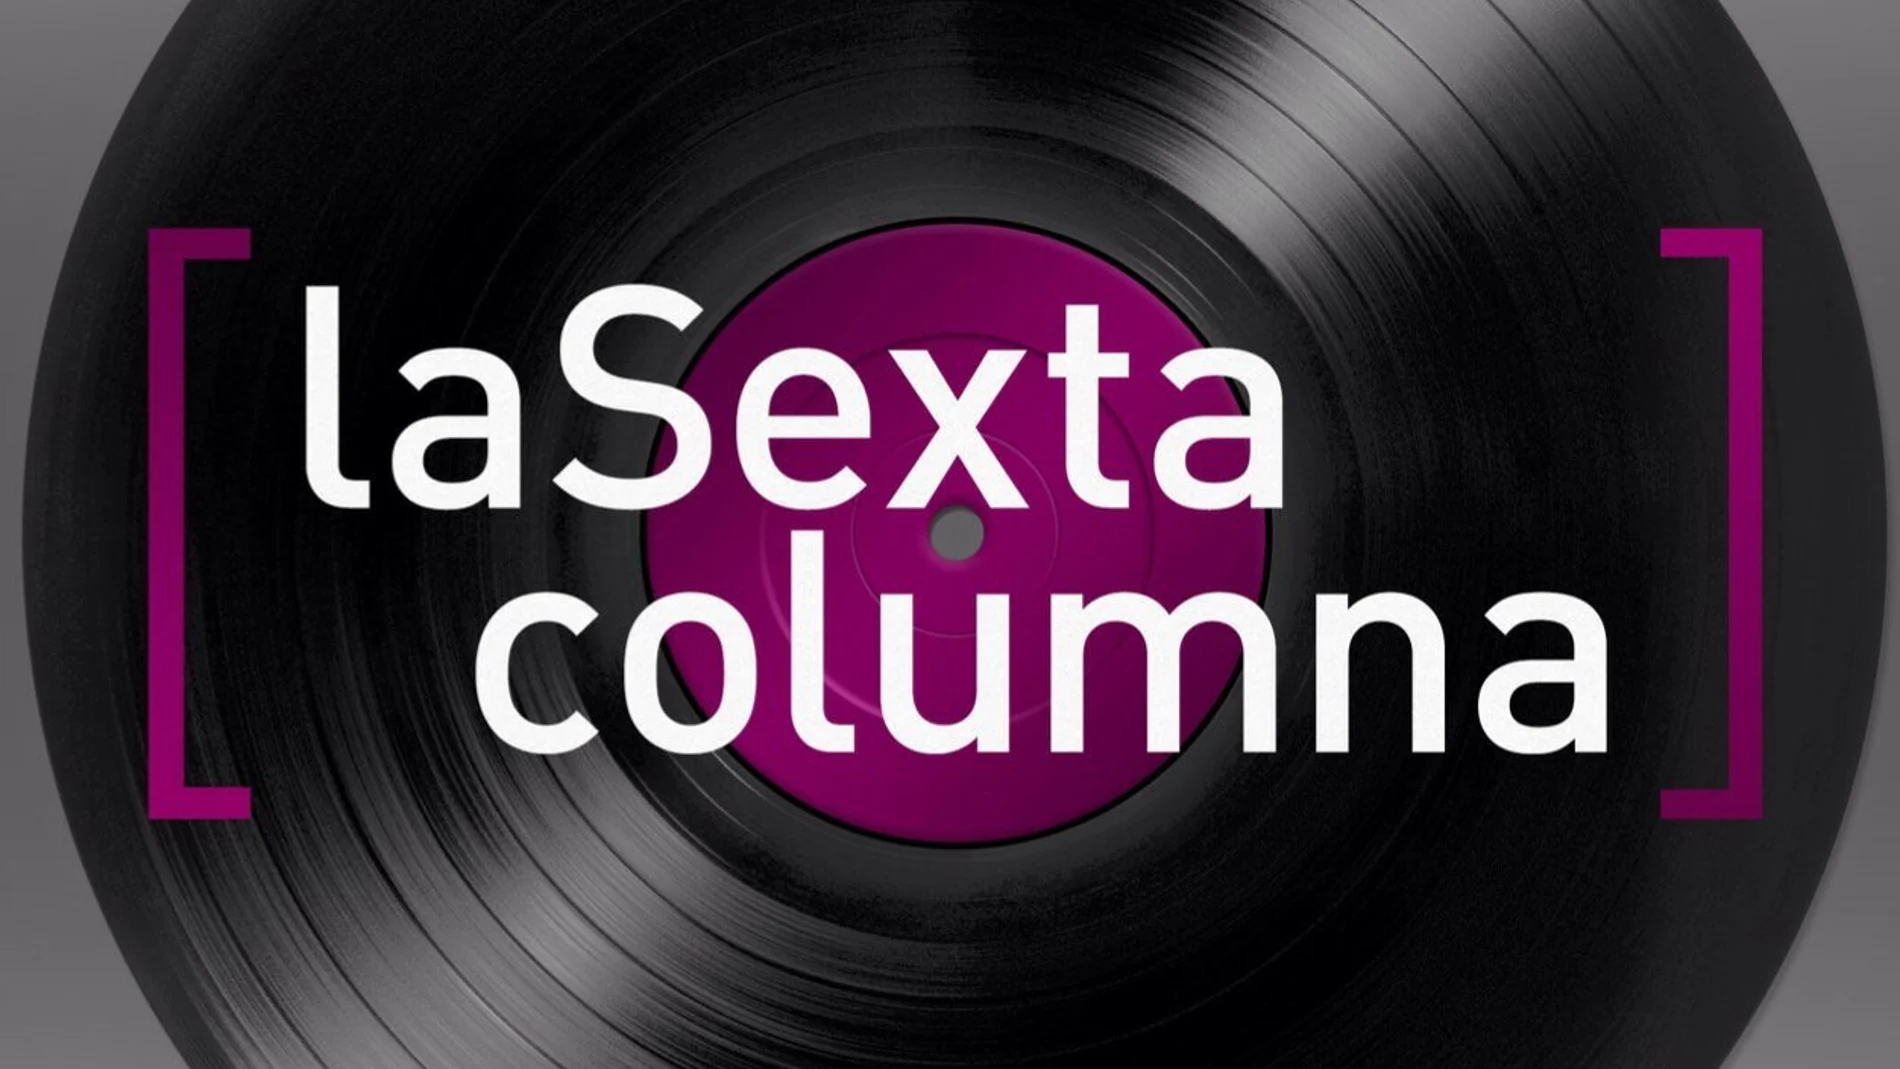 La música de laSexta Columna en laSexta.com